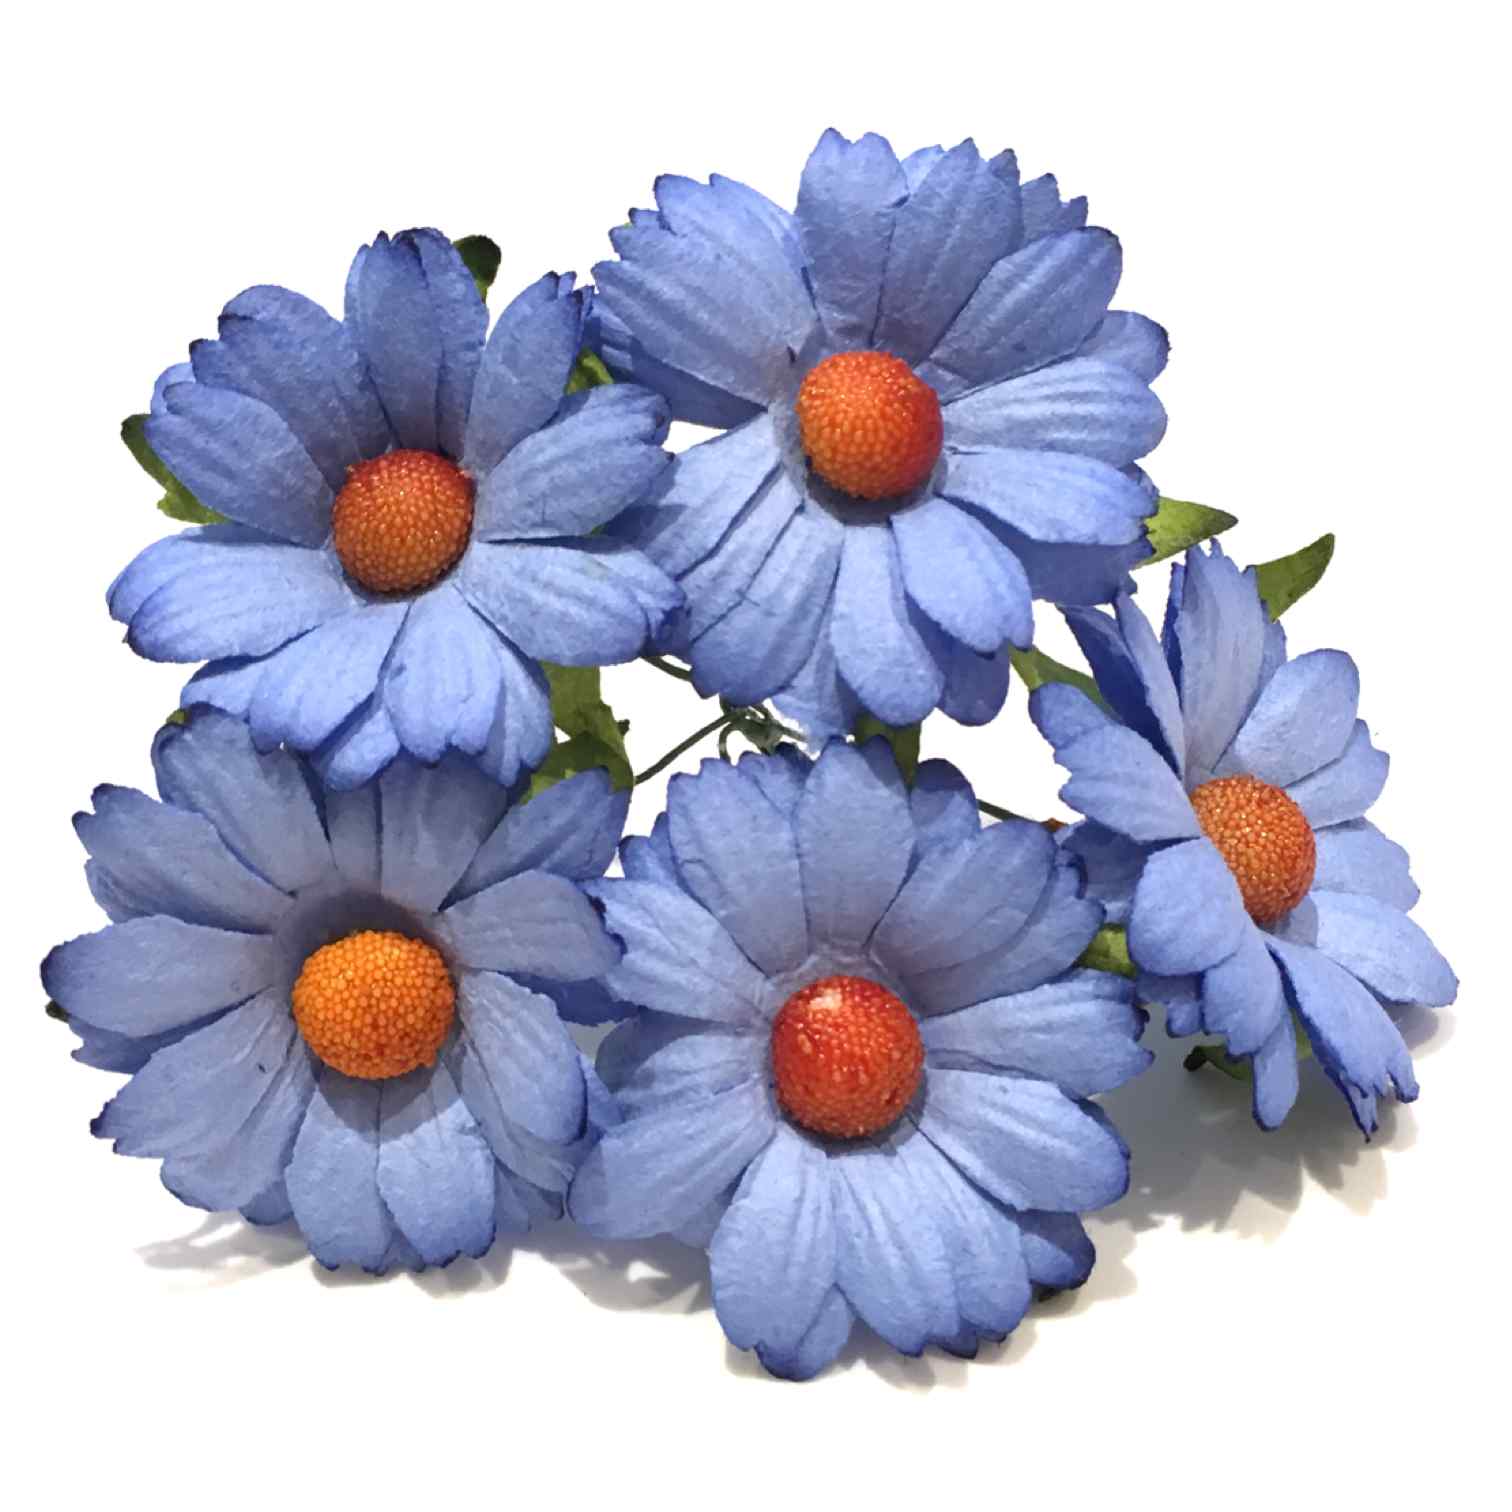 Deep Blue Mulberry Paper Chrysanthemums Chry009